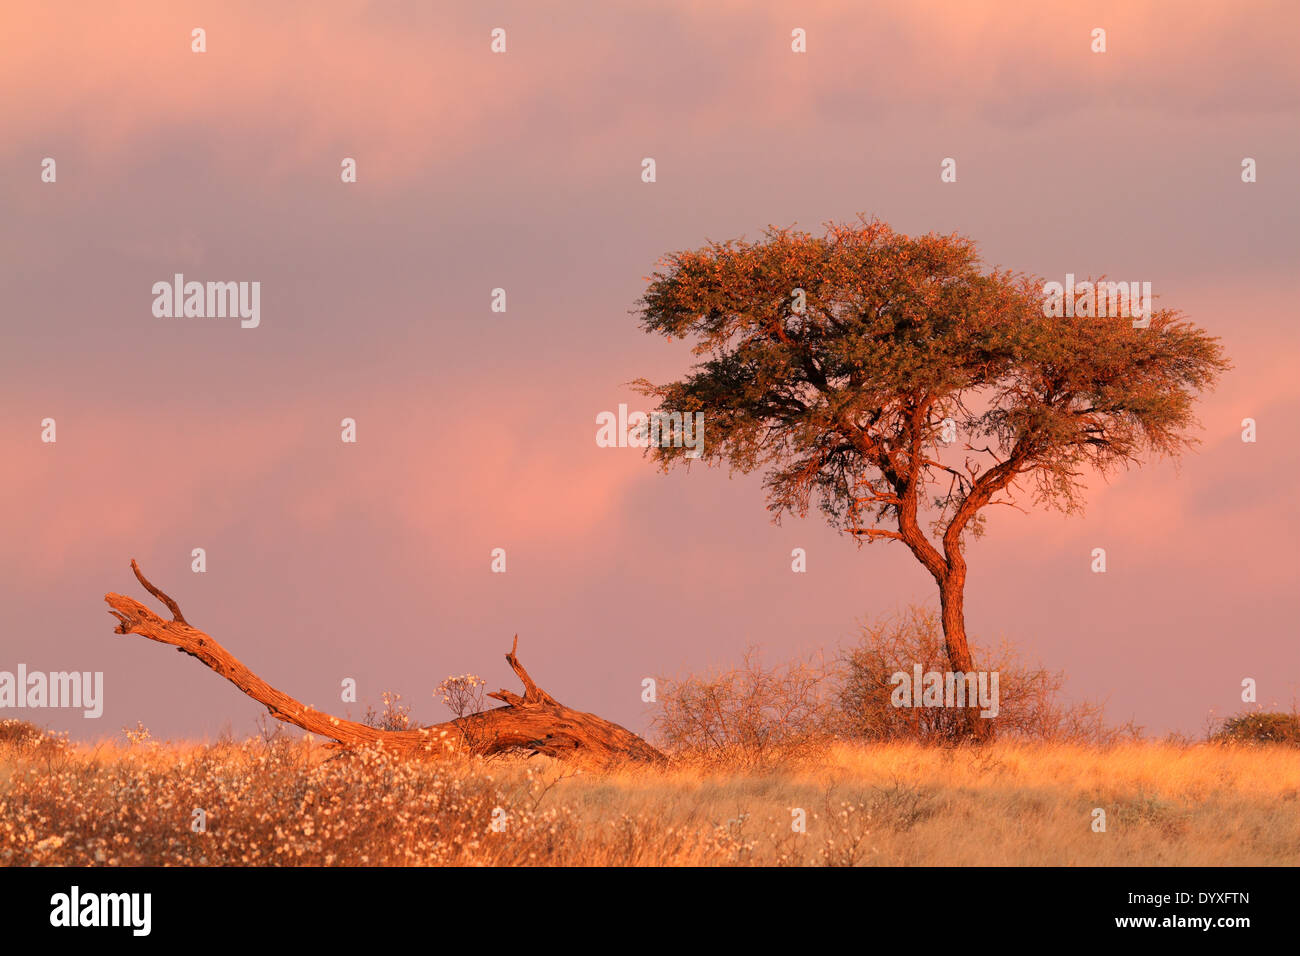 Desert landscape with an Acacia tree and cloudy sky at sunset, Kalahari desert, South Africa Stock Photo